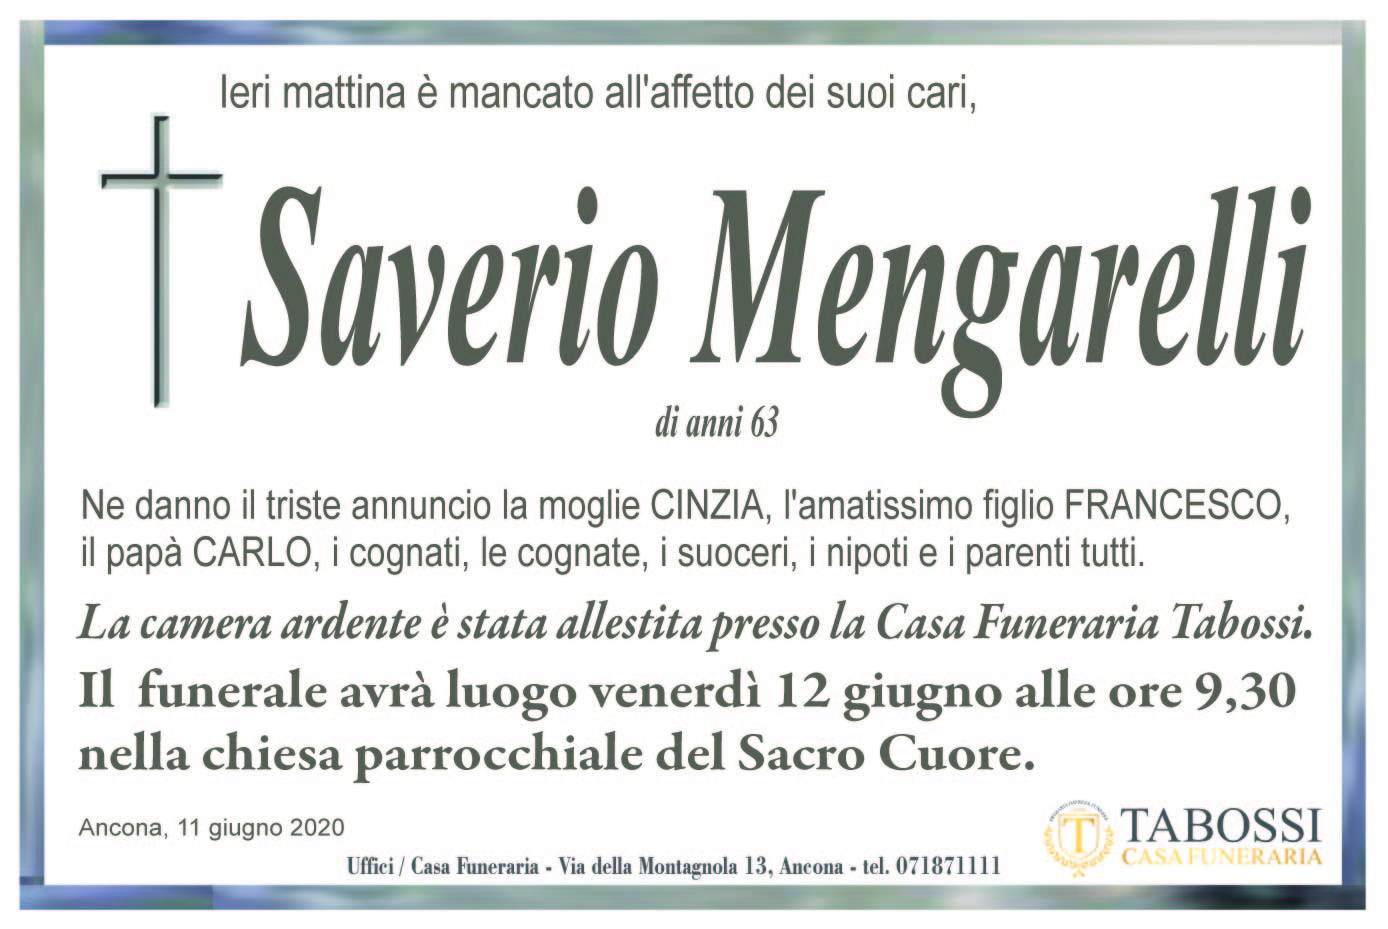 Saverio Mengarelli